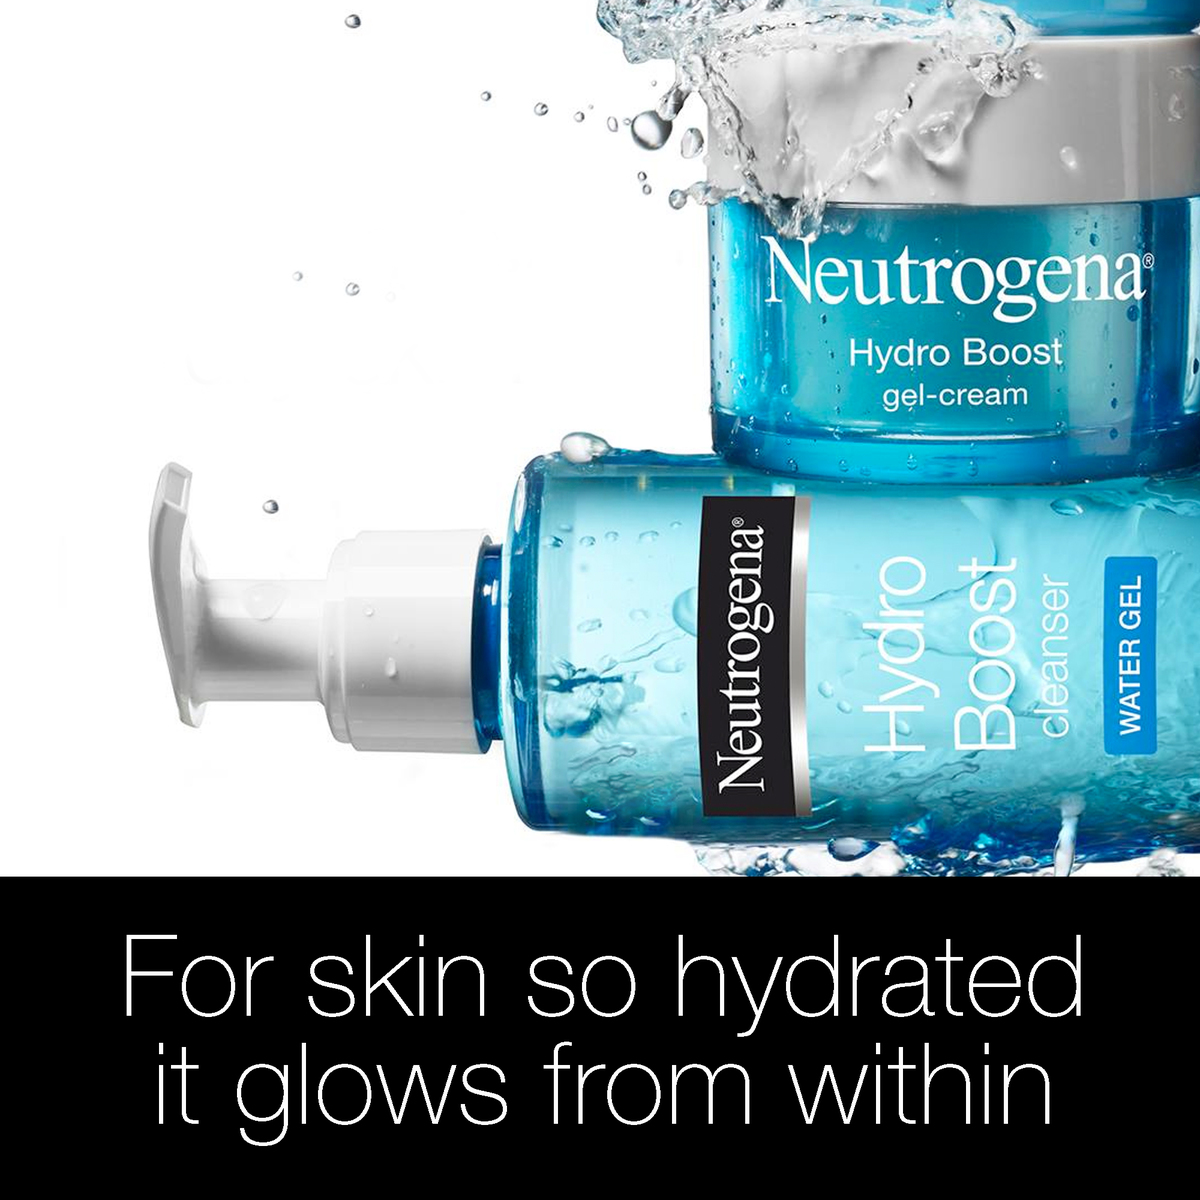 Neutrogena Face Cream Gel Hydro Boost 50 ml